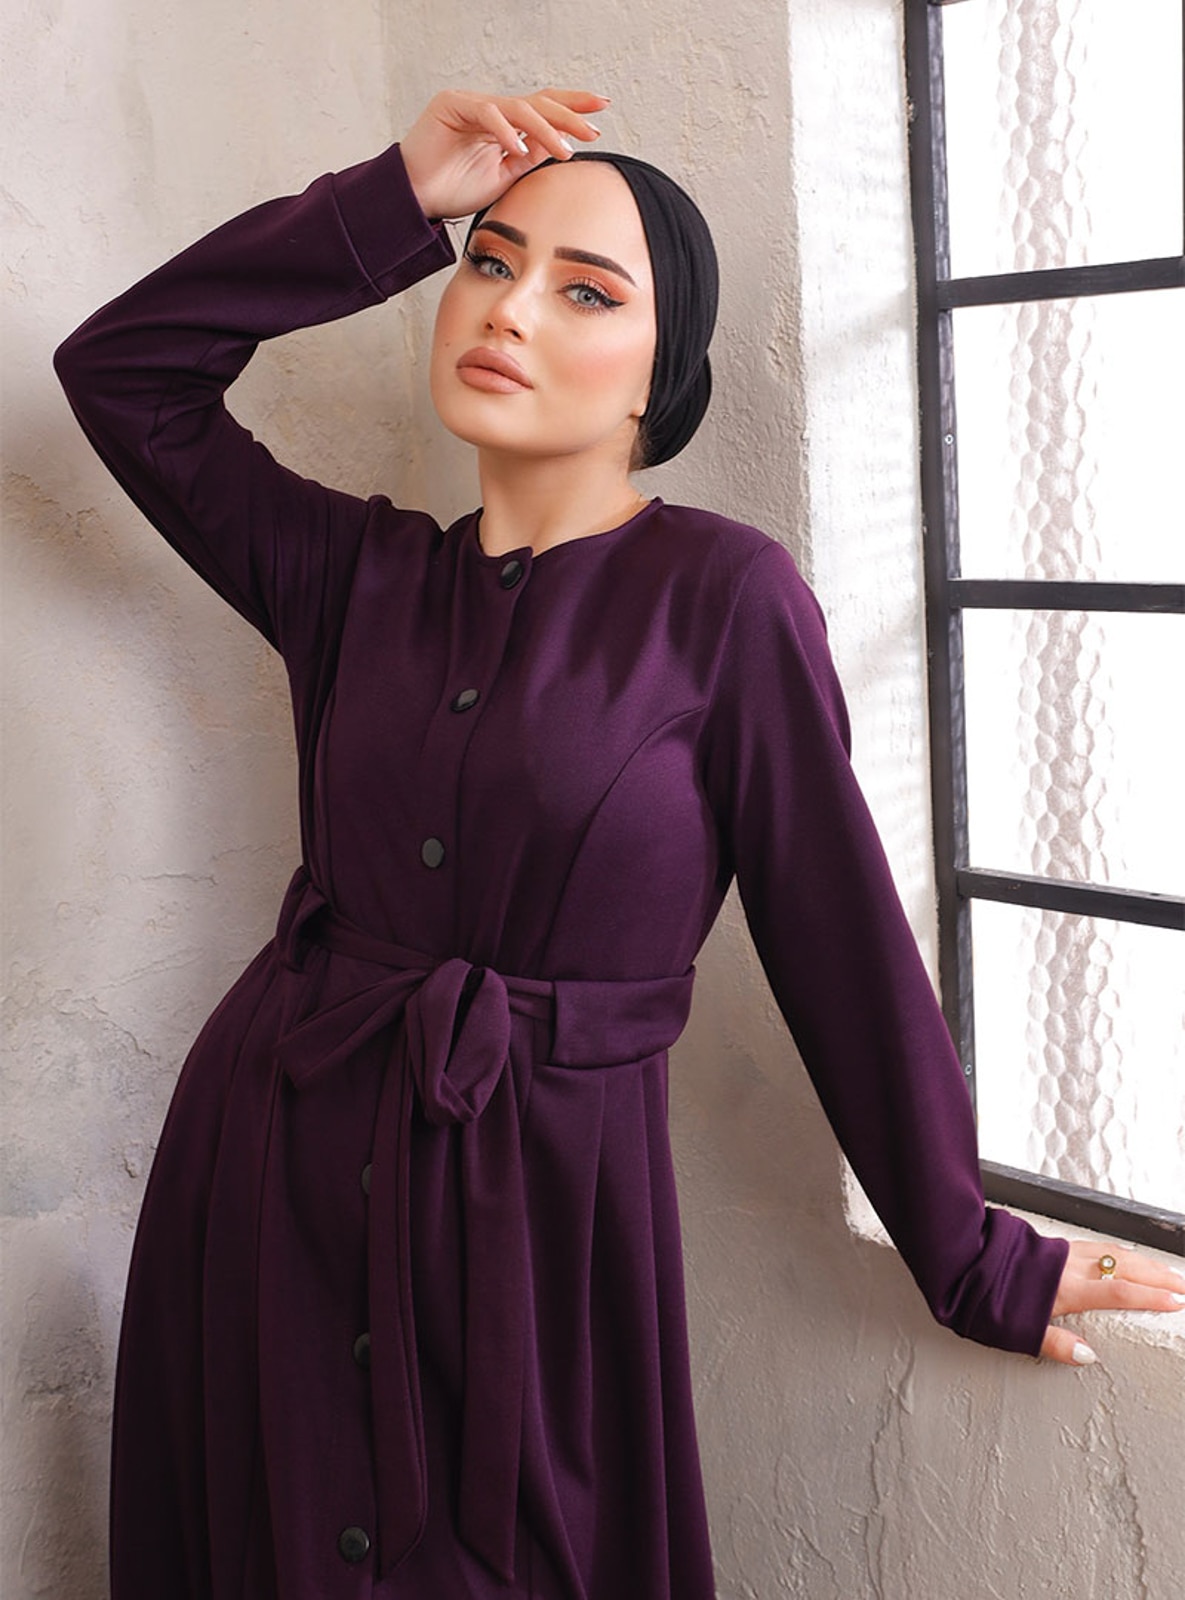 Purple - Crew neck - Unlined - Modest Dress